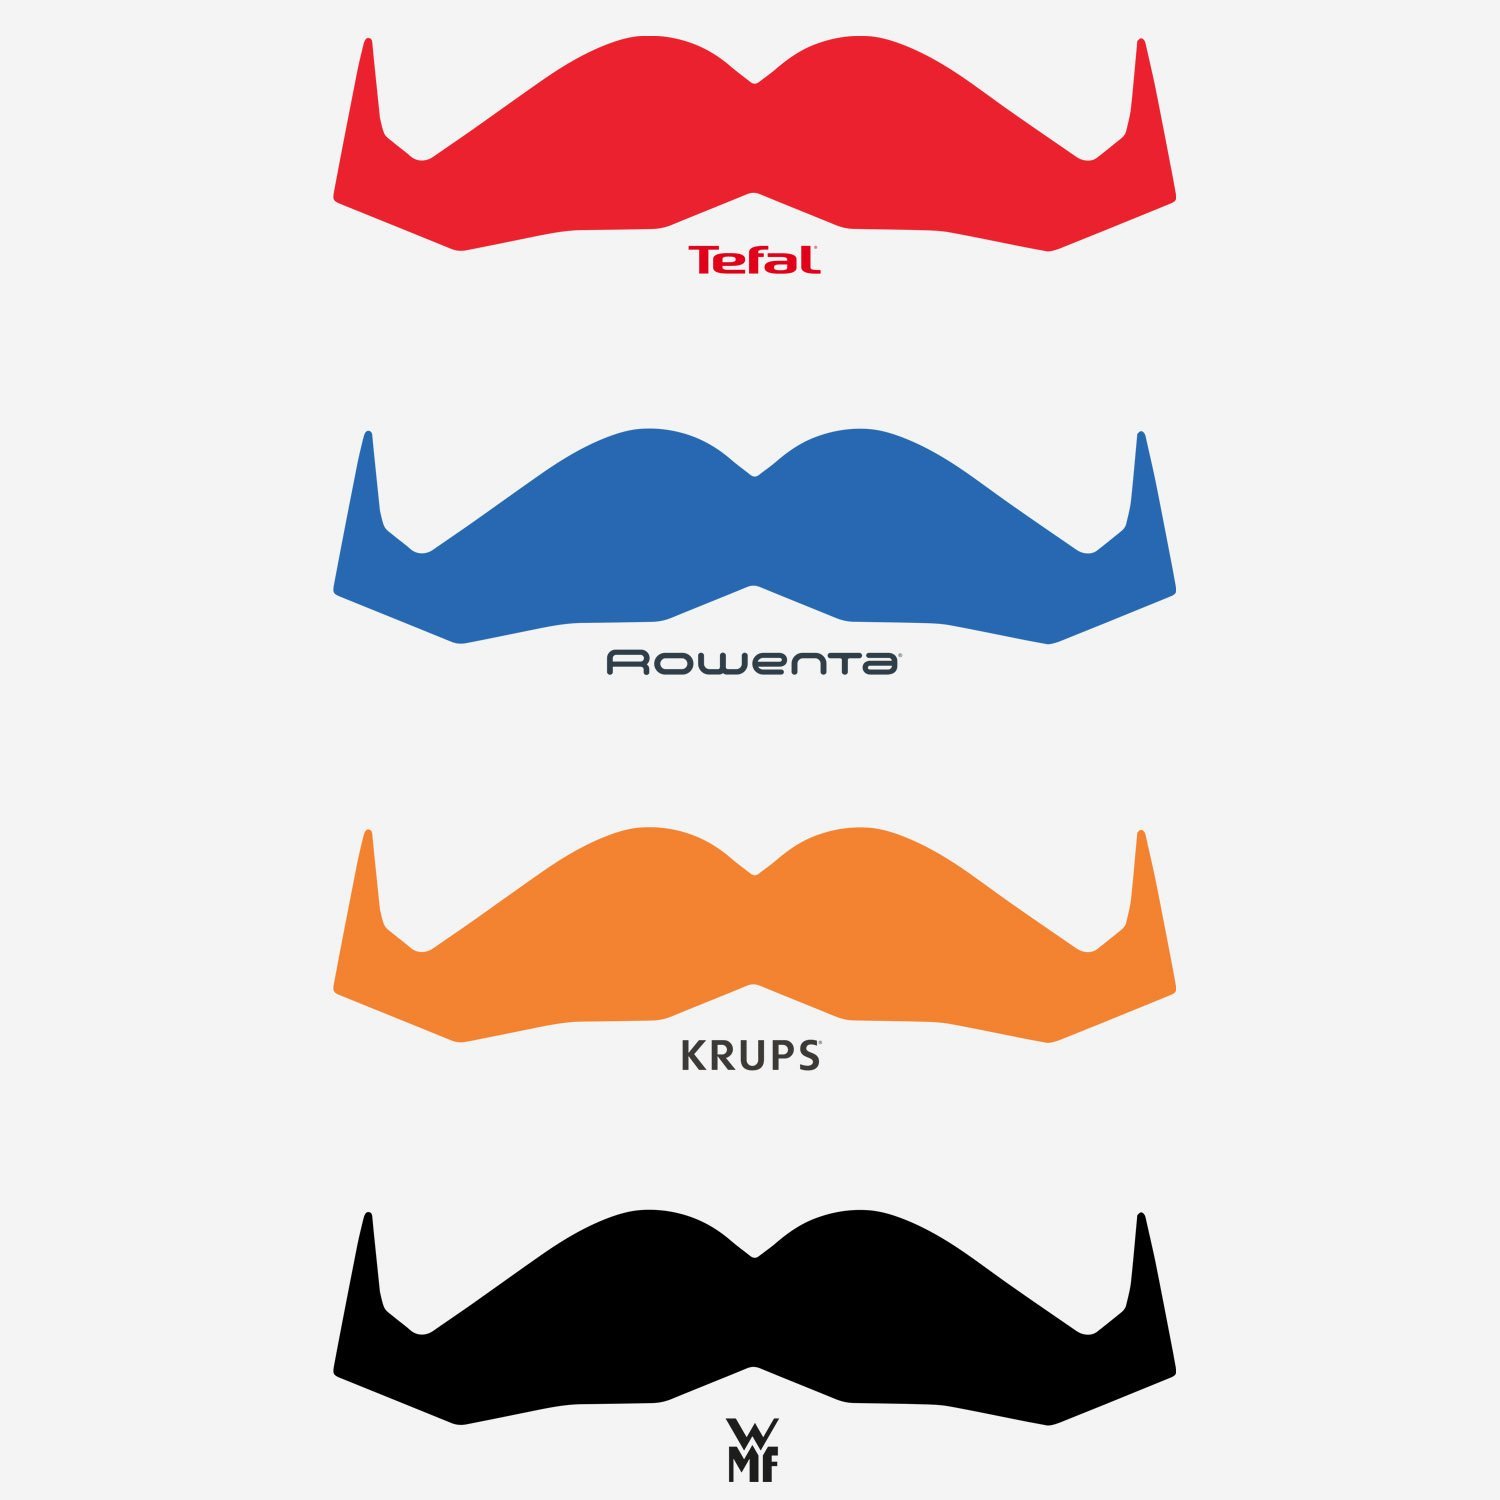 Tefal Rowenta Krups WMF logo Movember 2022 2.jpg